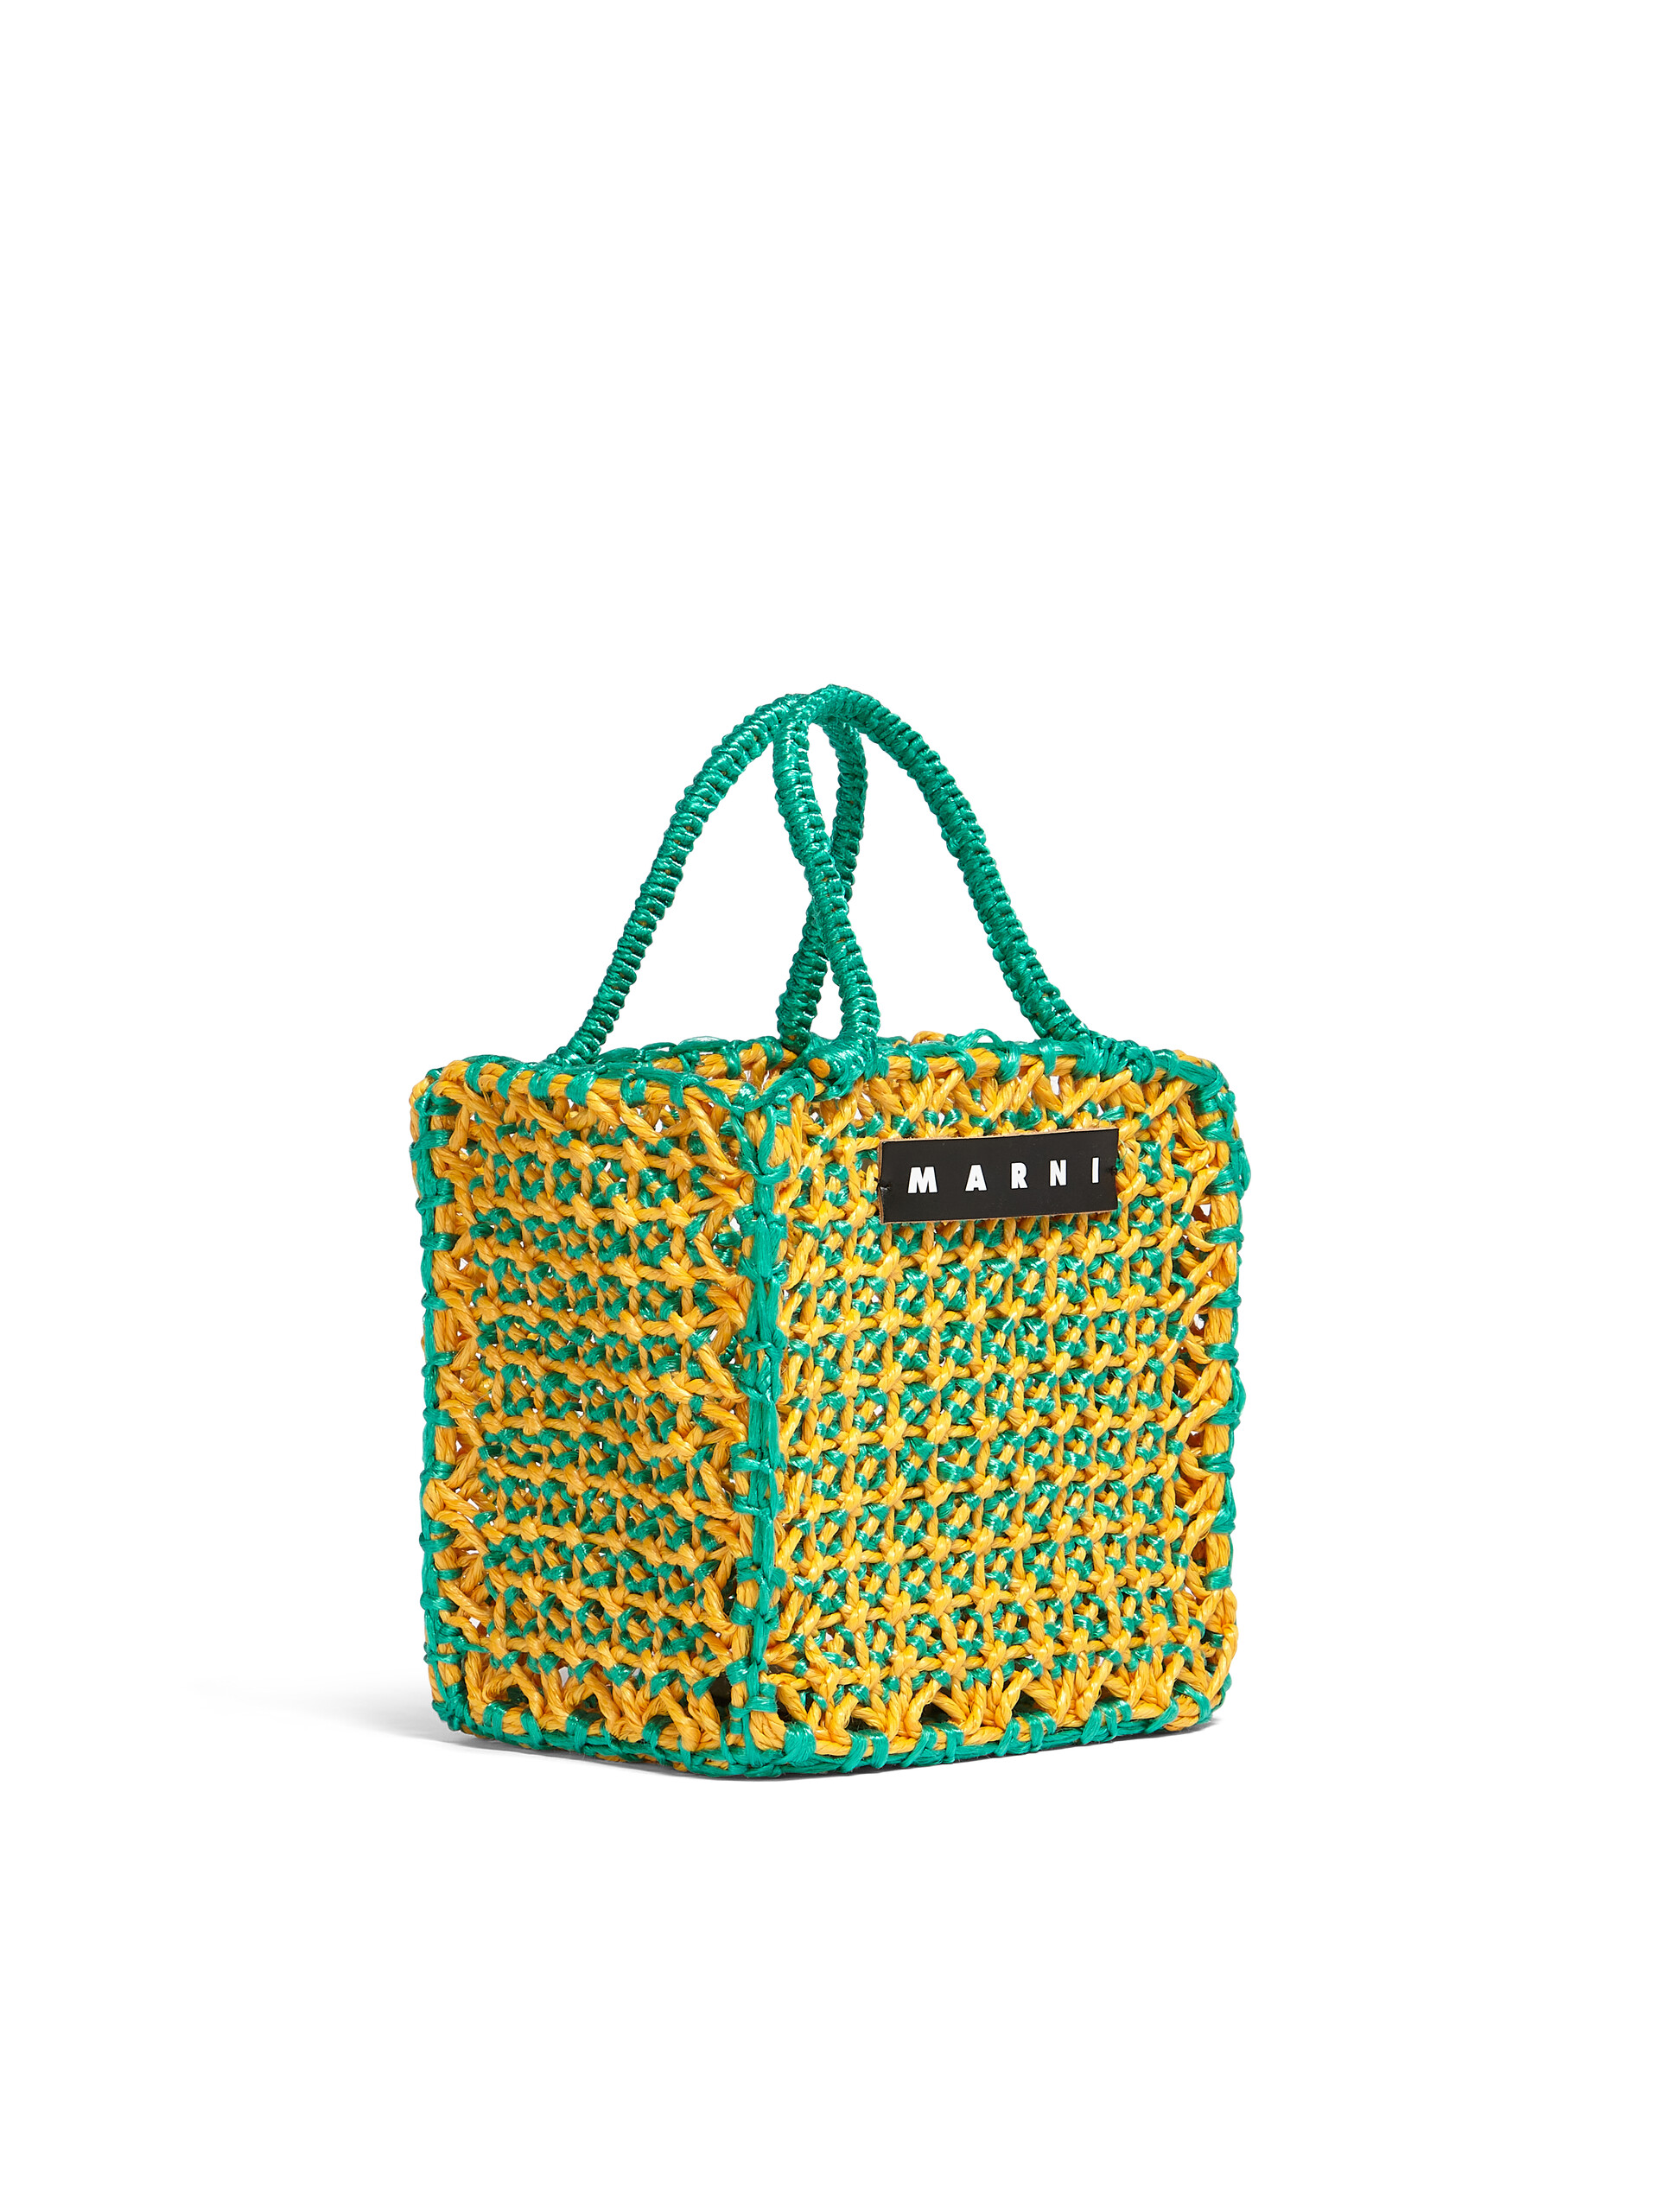 MARNI MARKET JURTA small bag in green and yellow crochet - Shopping Bags - Image 2